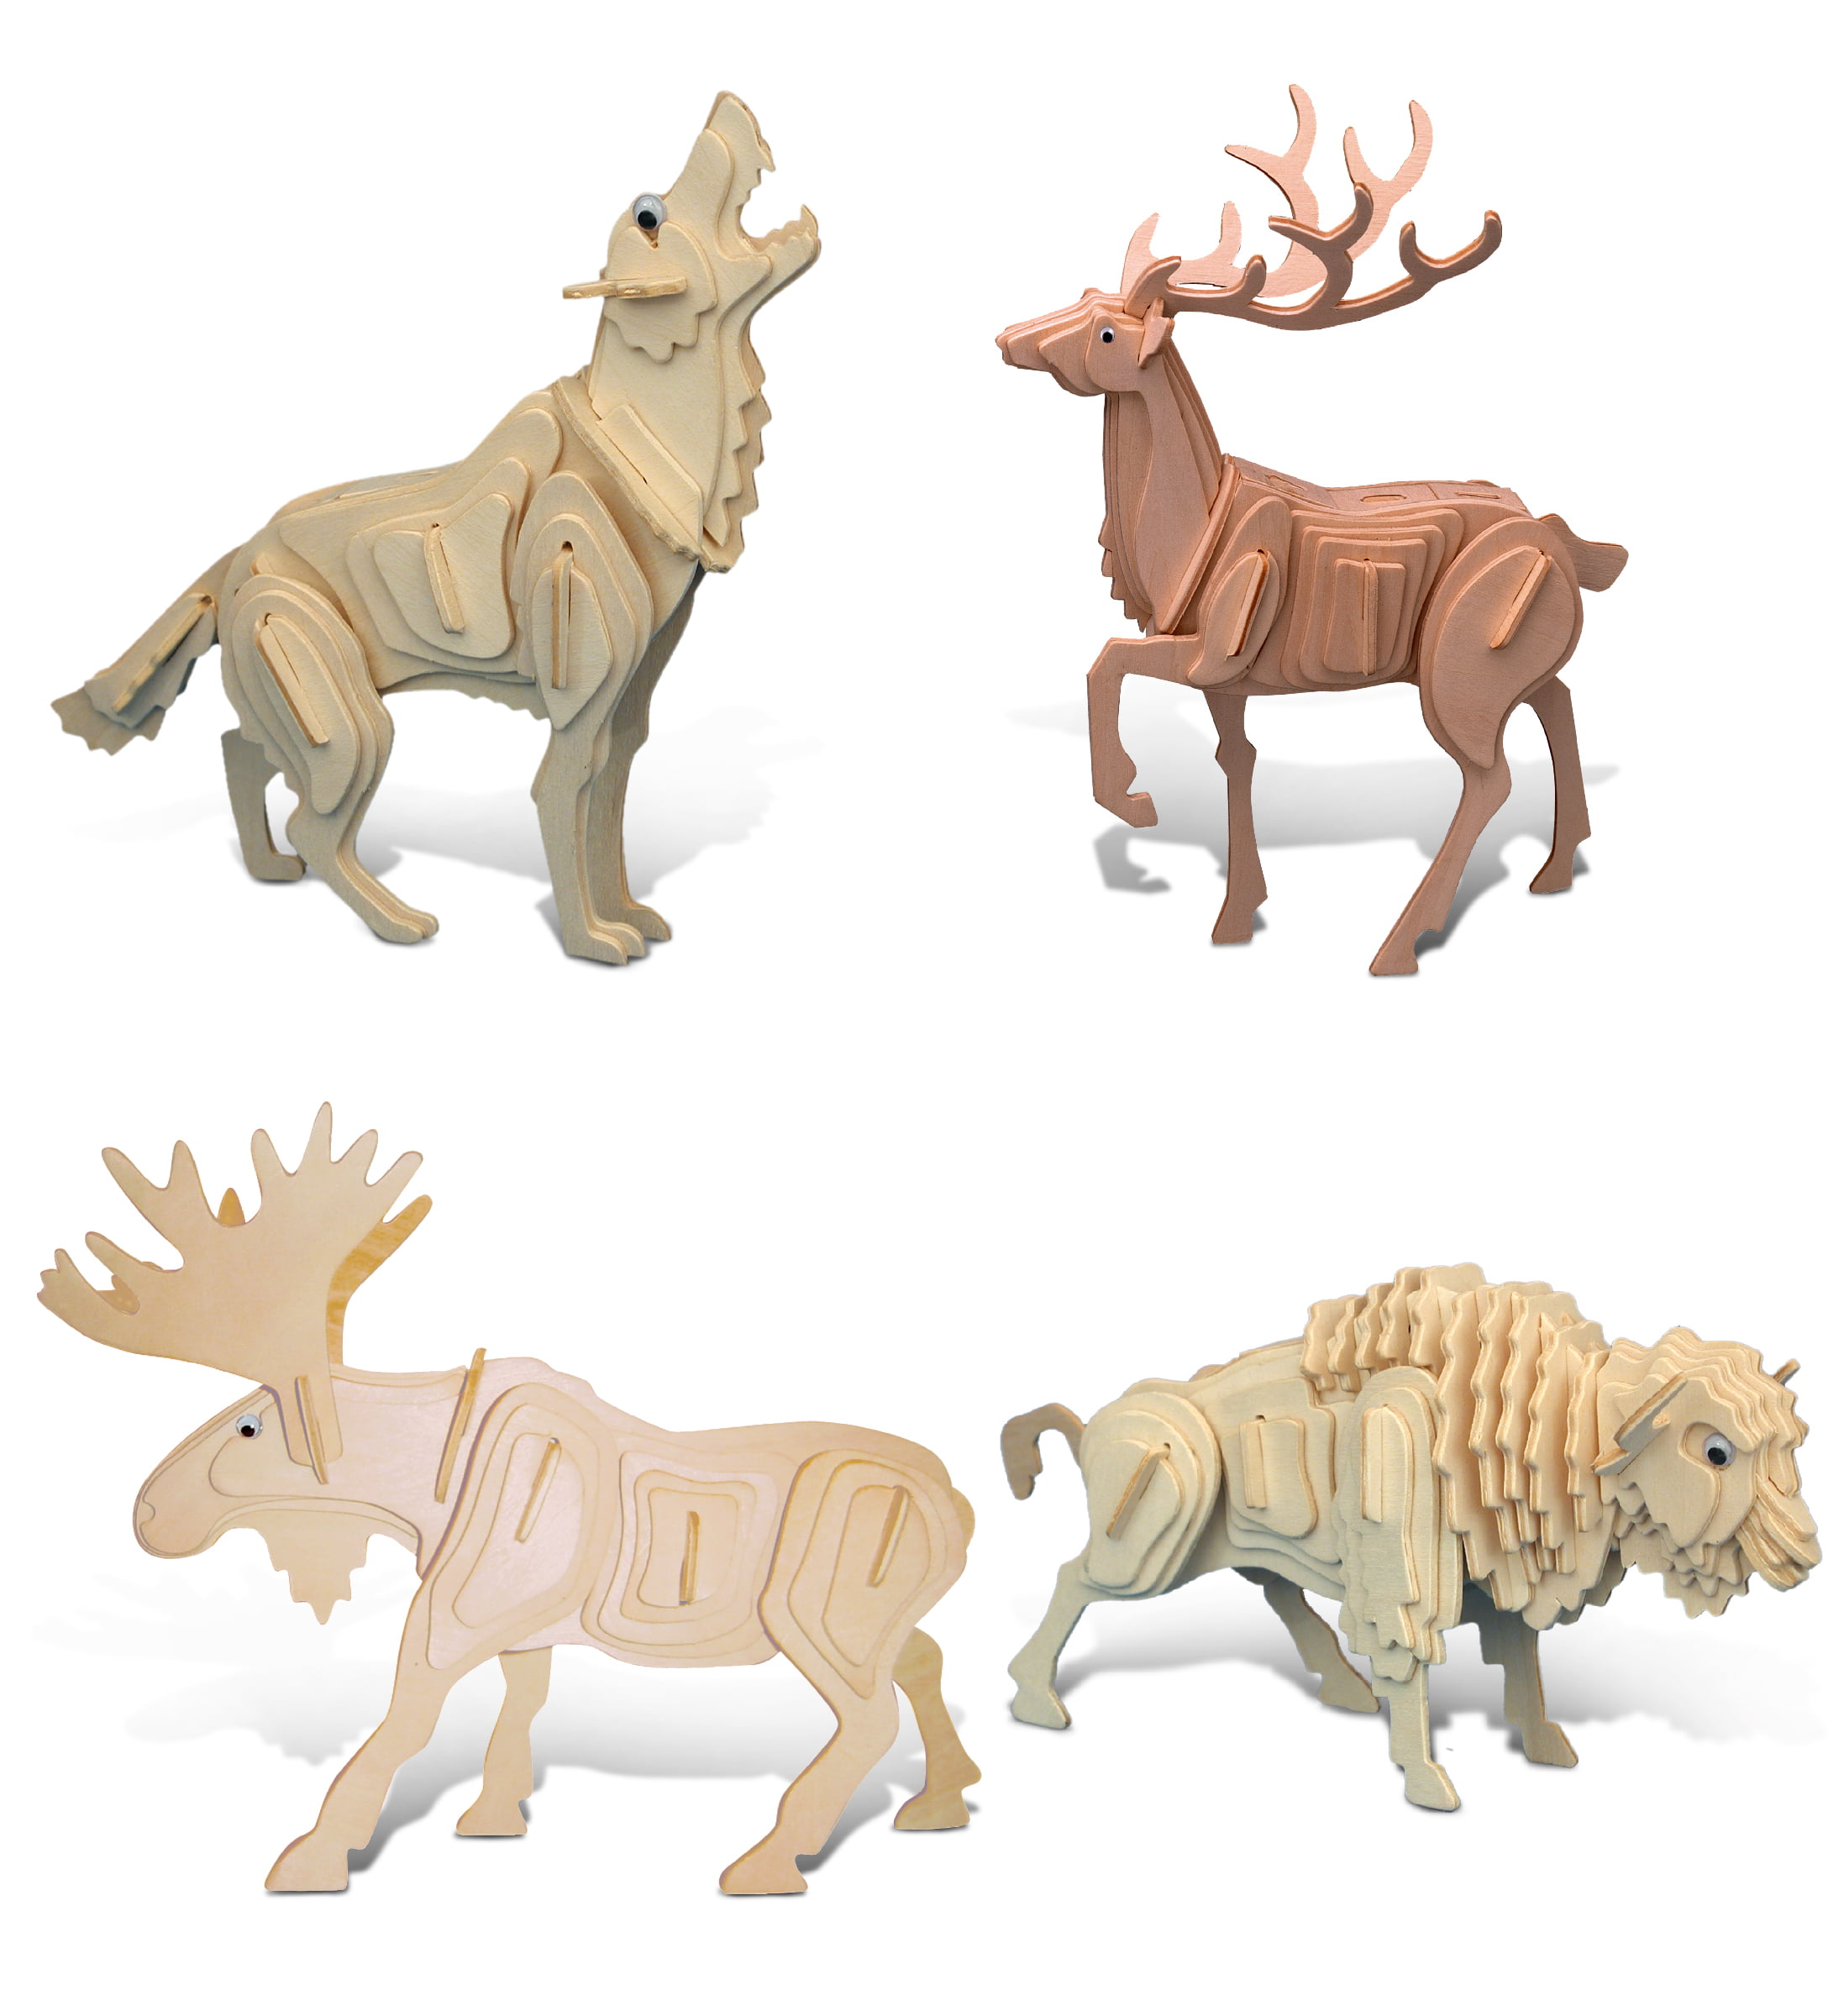 Deer Elk 3D Puzzle Woodcraft Construction Kit Home Schooling Art Project No Glue 